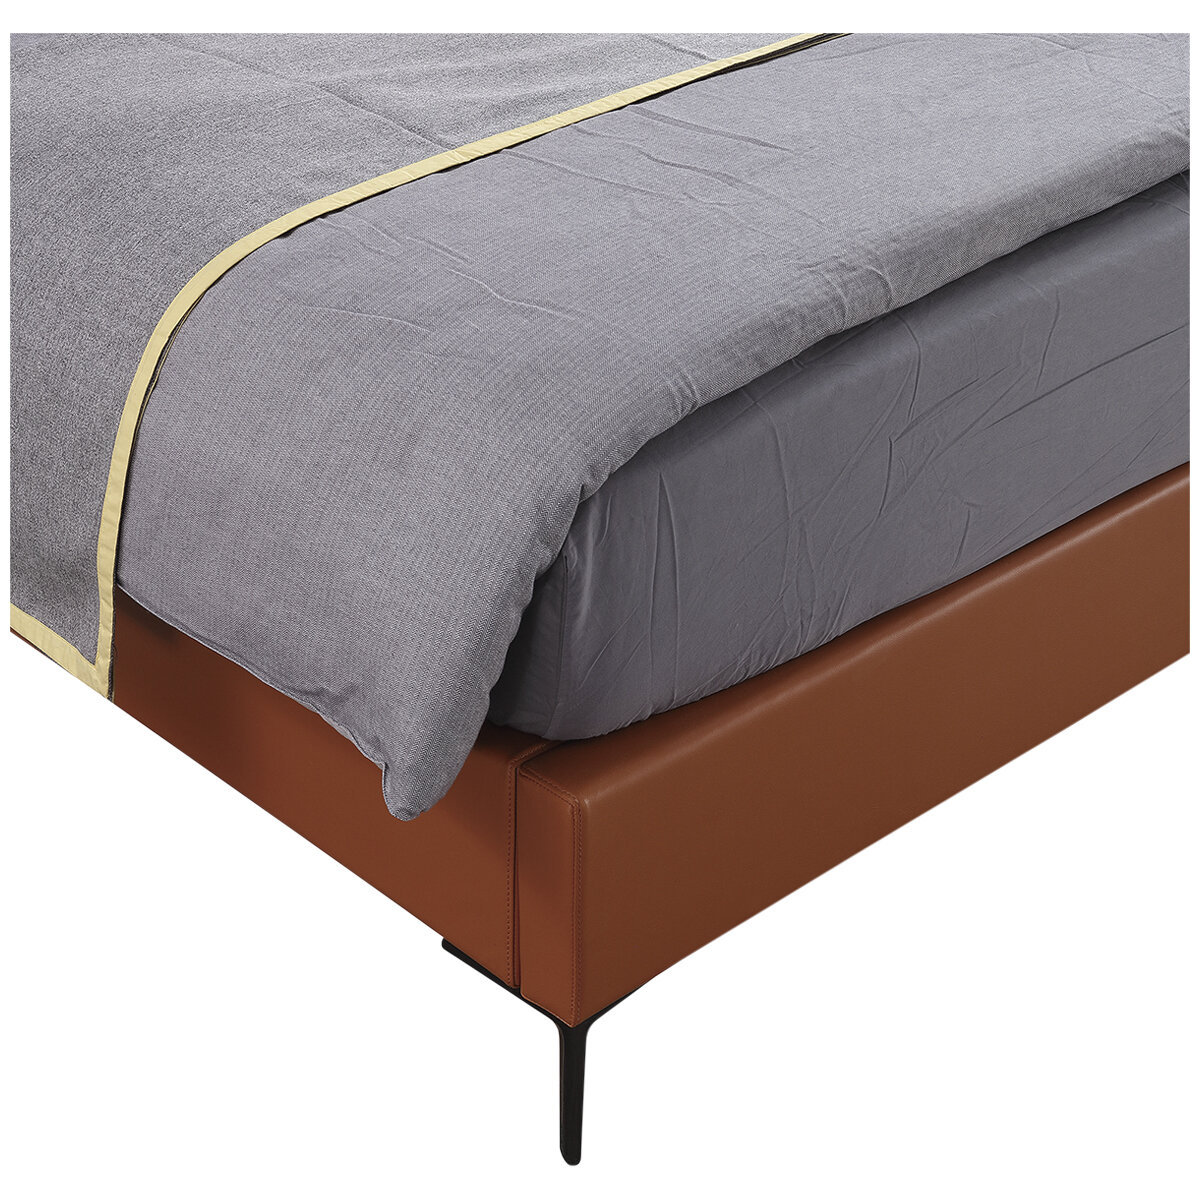 Moran Jackson King Bed with Encasement and Slats